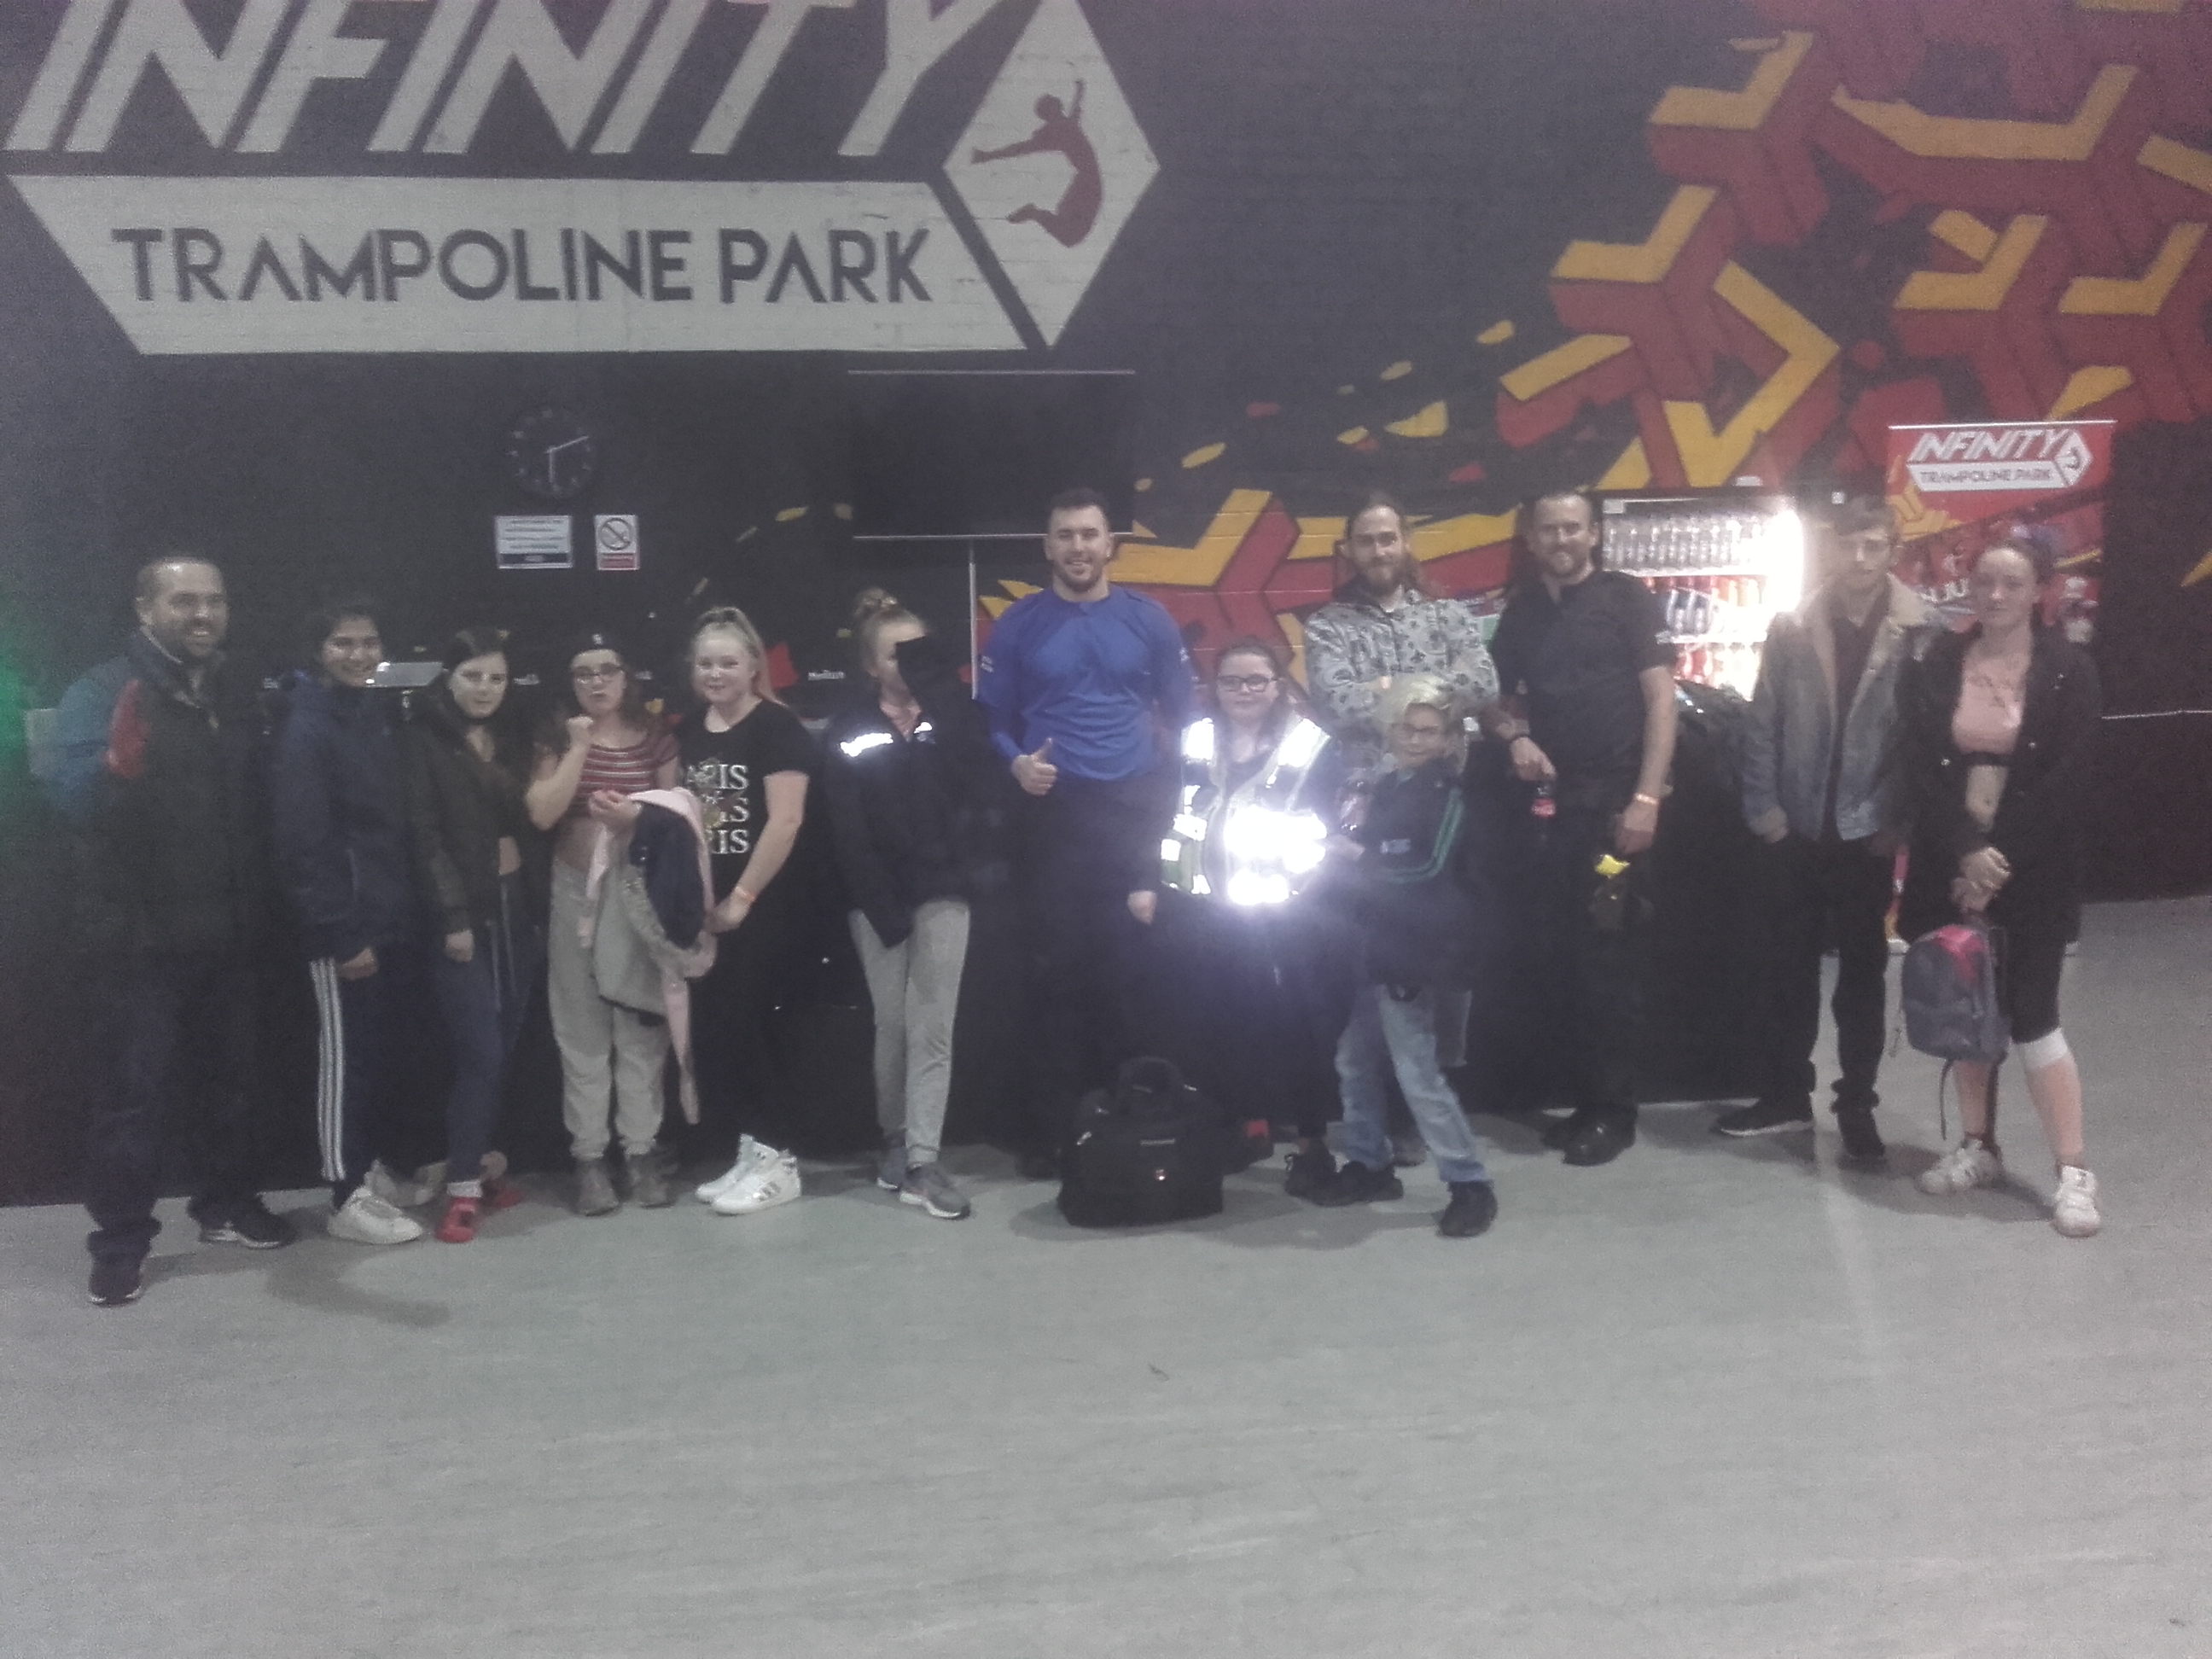 Infinity Trampoline Park Cardiff